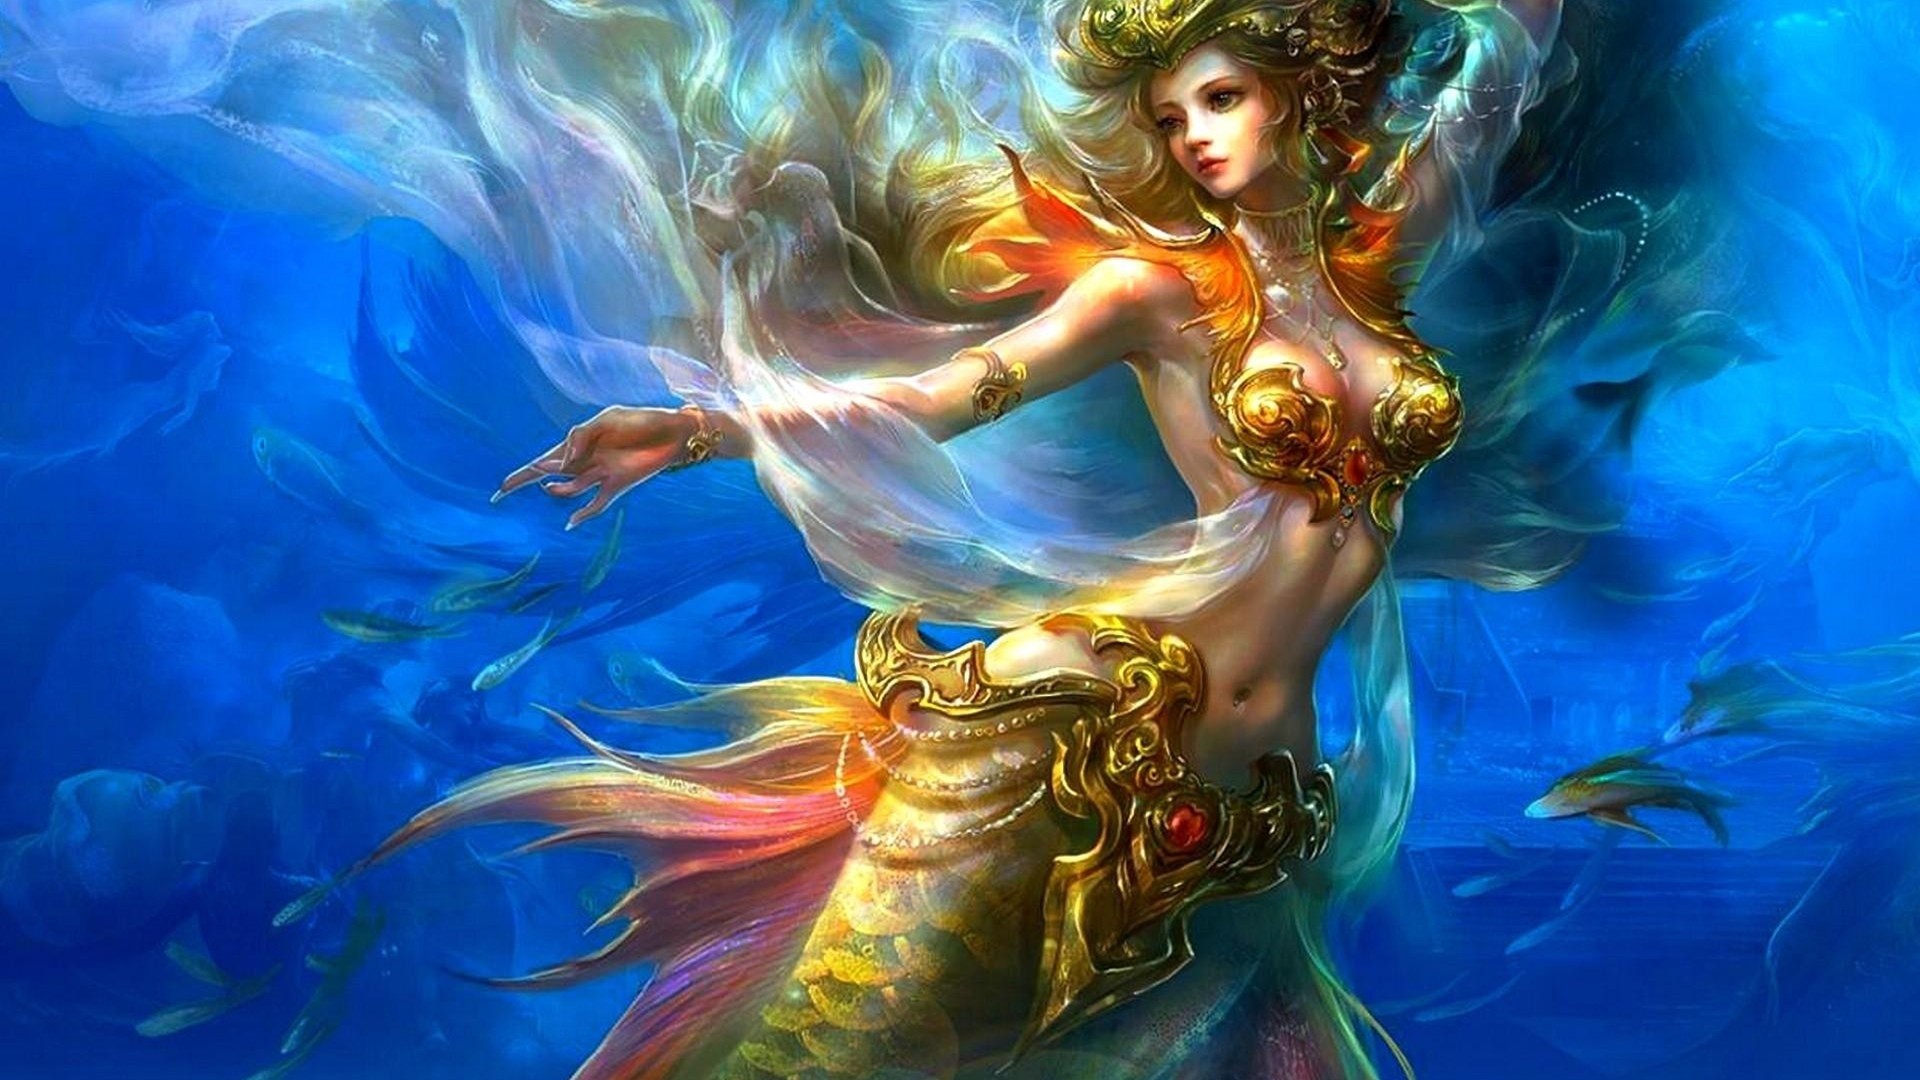 Mermaids wallpaper photo hd